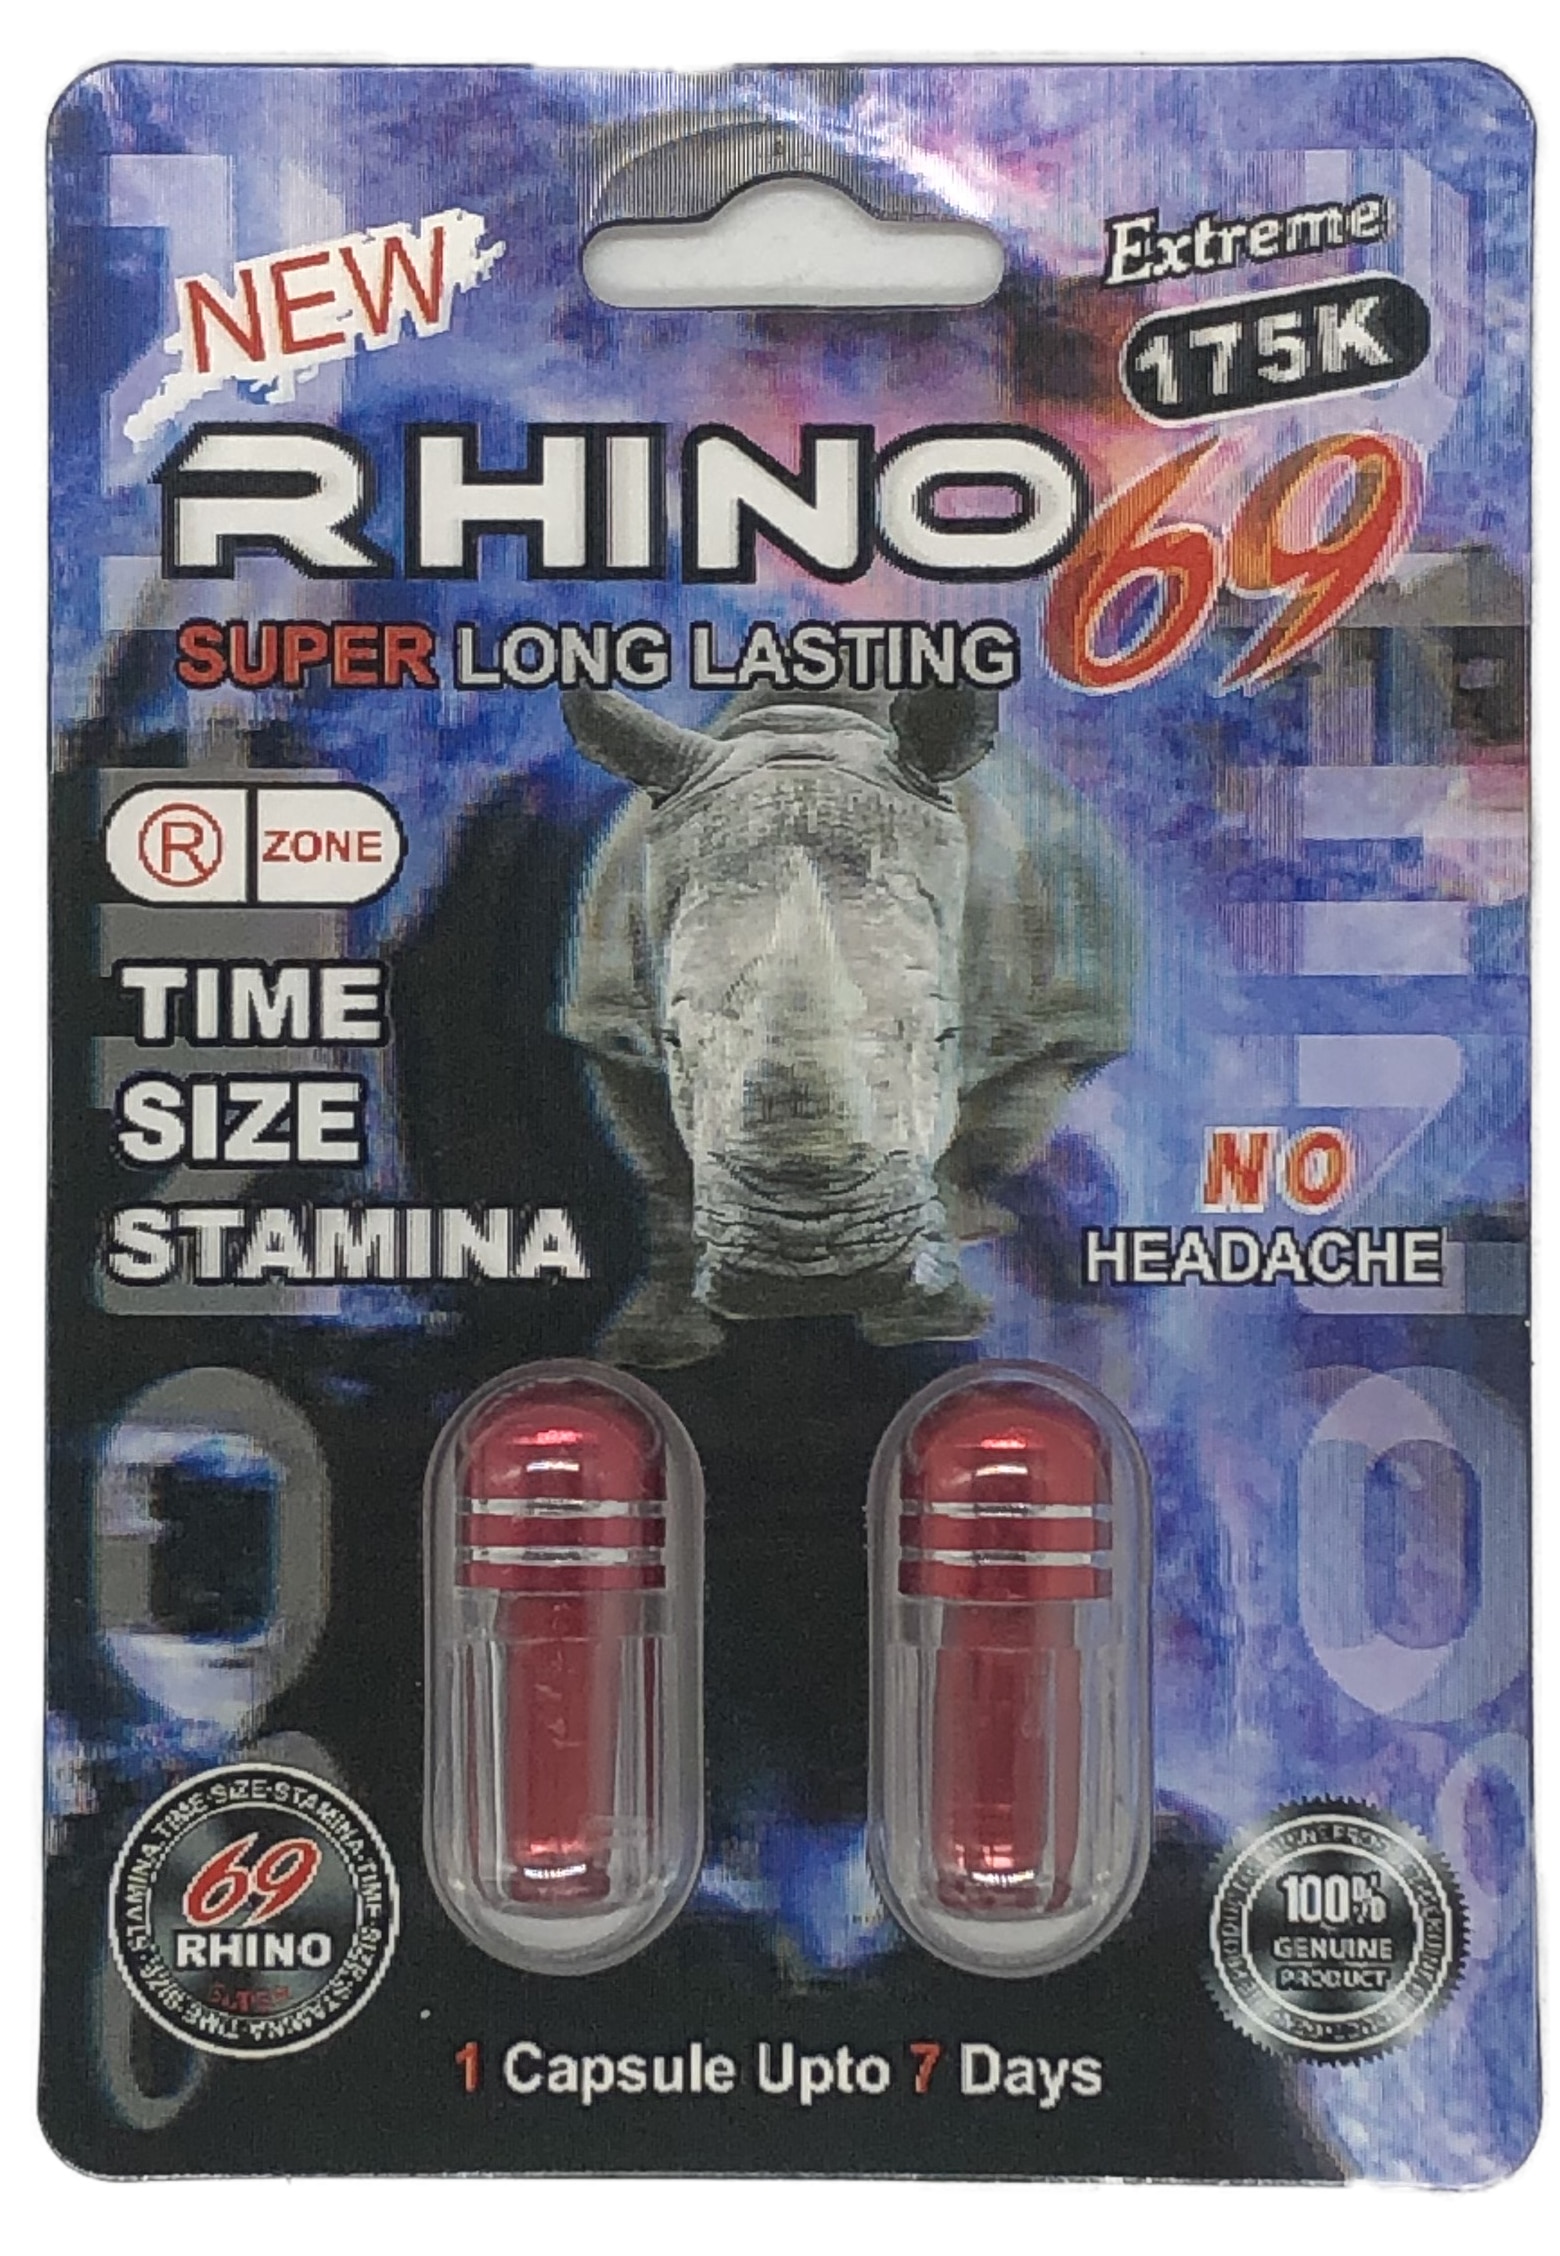 Rhino 69 Double 175k Pill Male Enhancement Sexual Supplement Platinum.